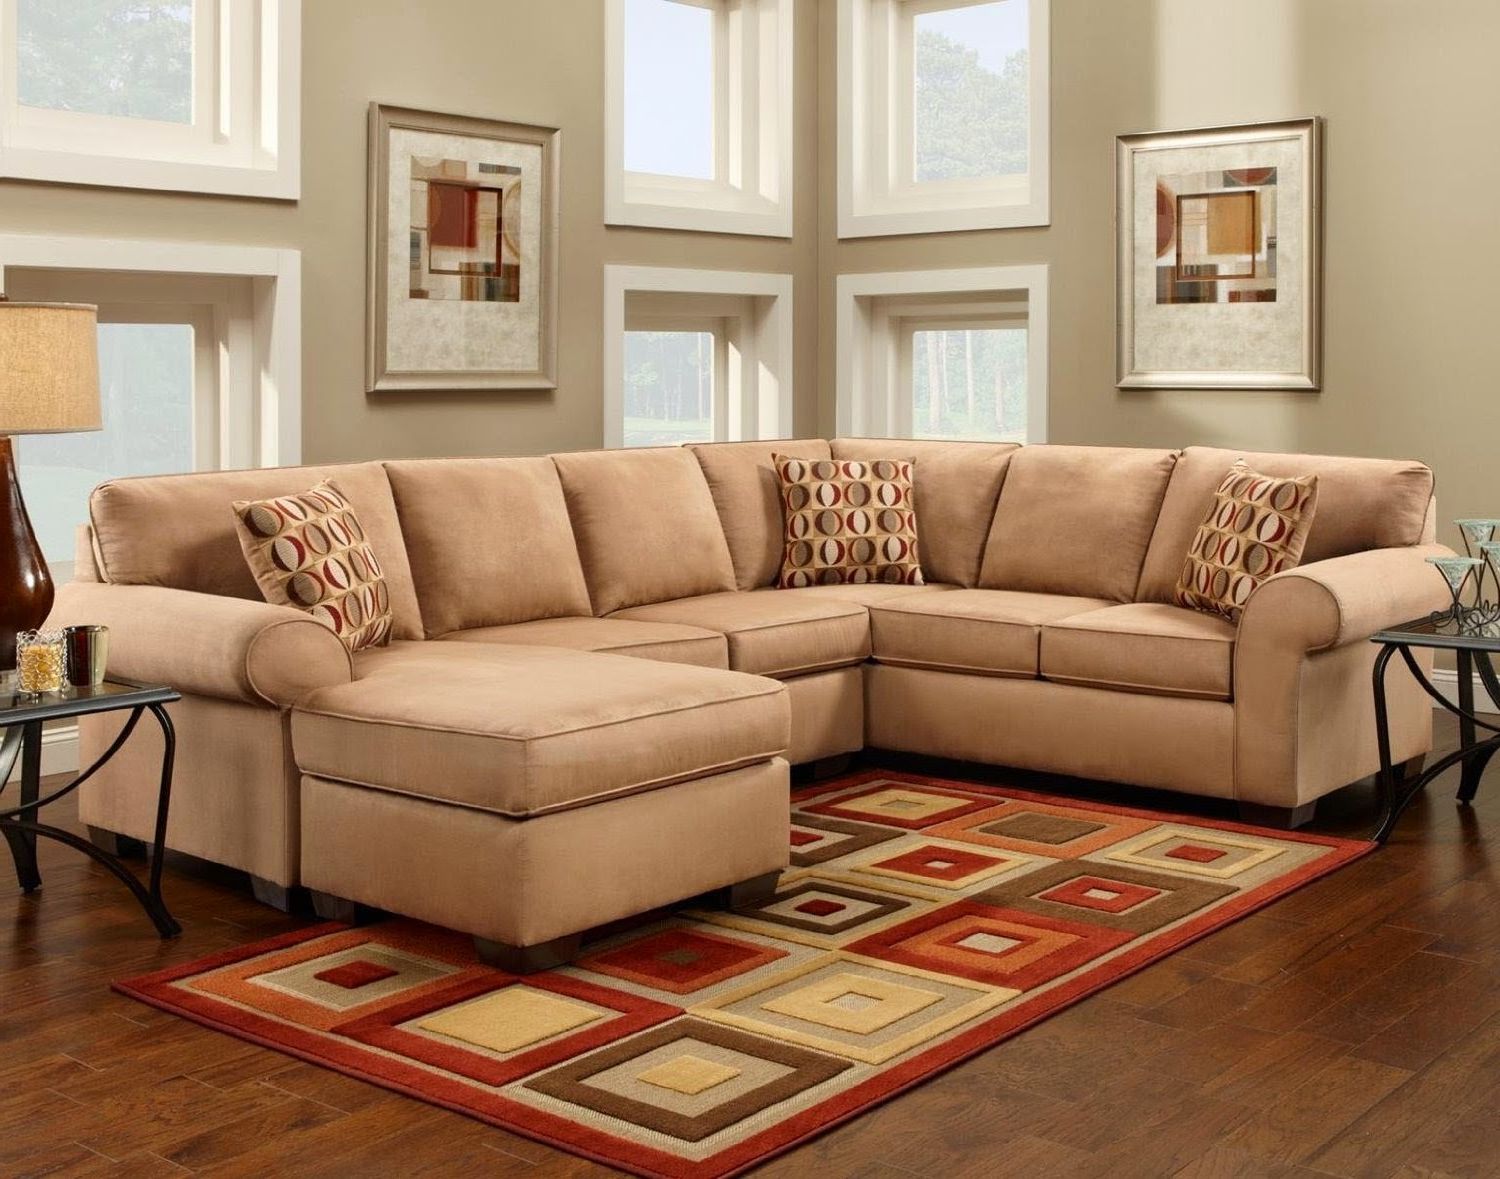 Trendy Microfiber Sectional Corner Sofas In 3 Popular Main Colors In Microfiber Sectional Sleeper Sofa (View 11 of 15)